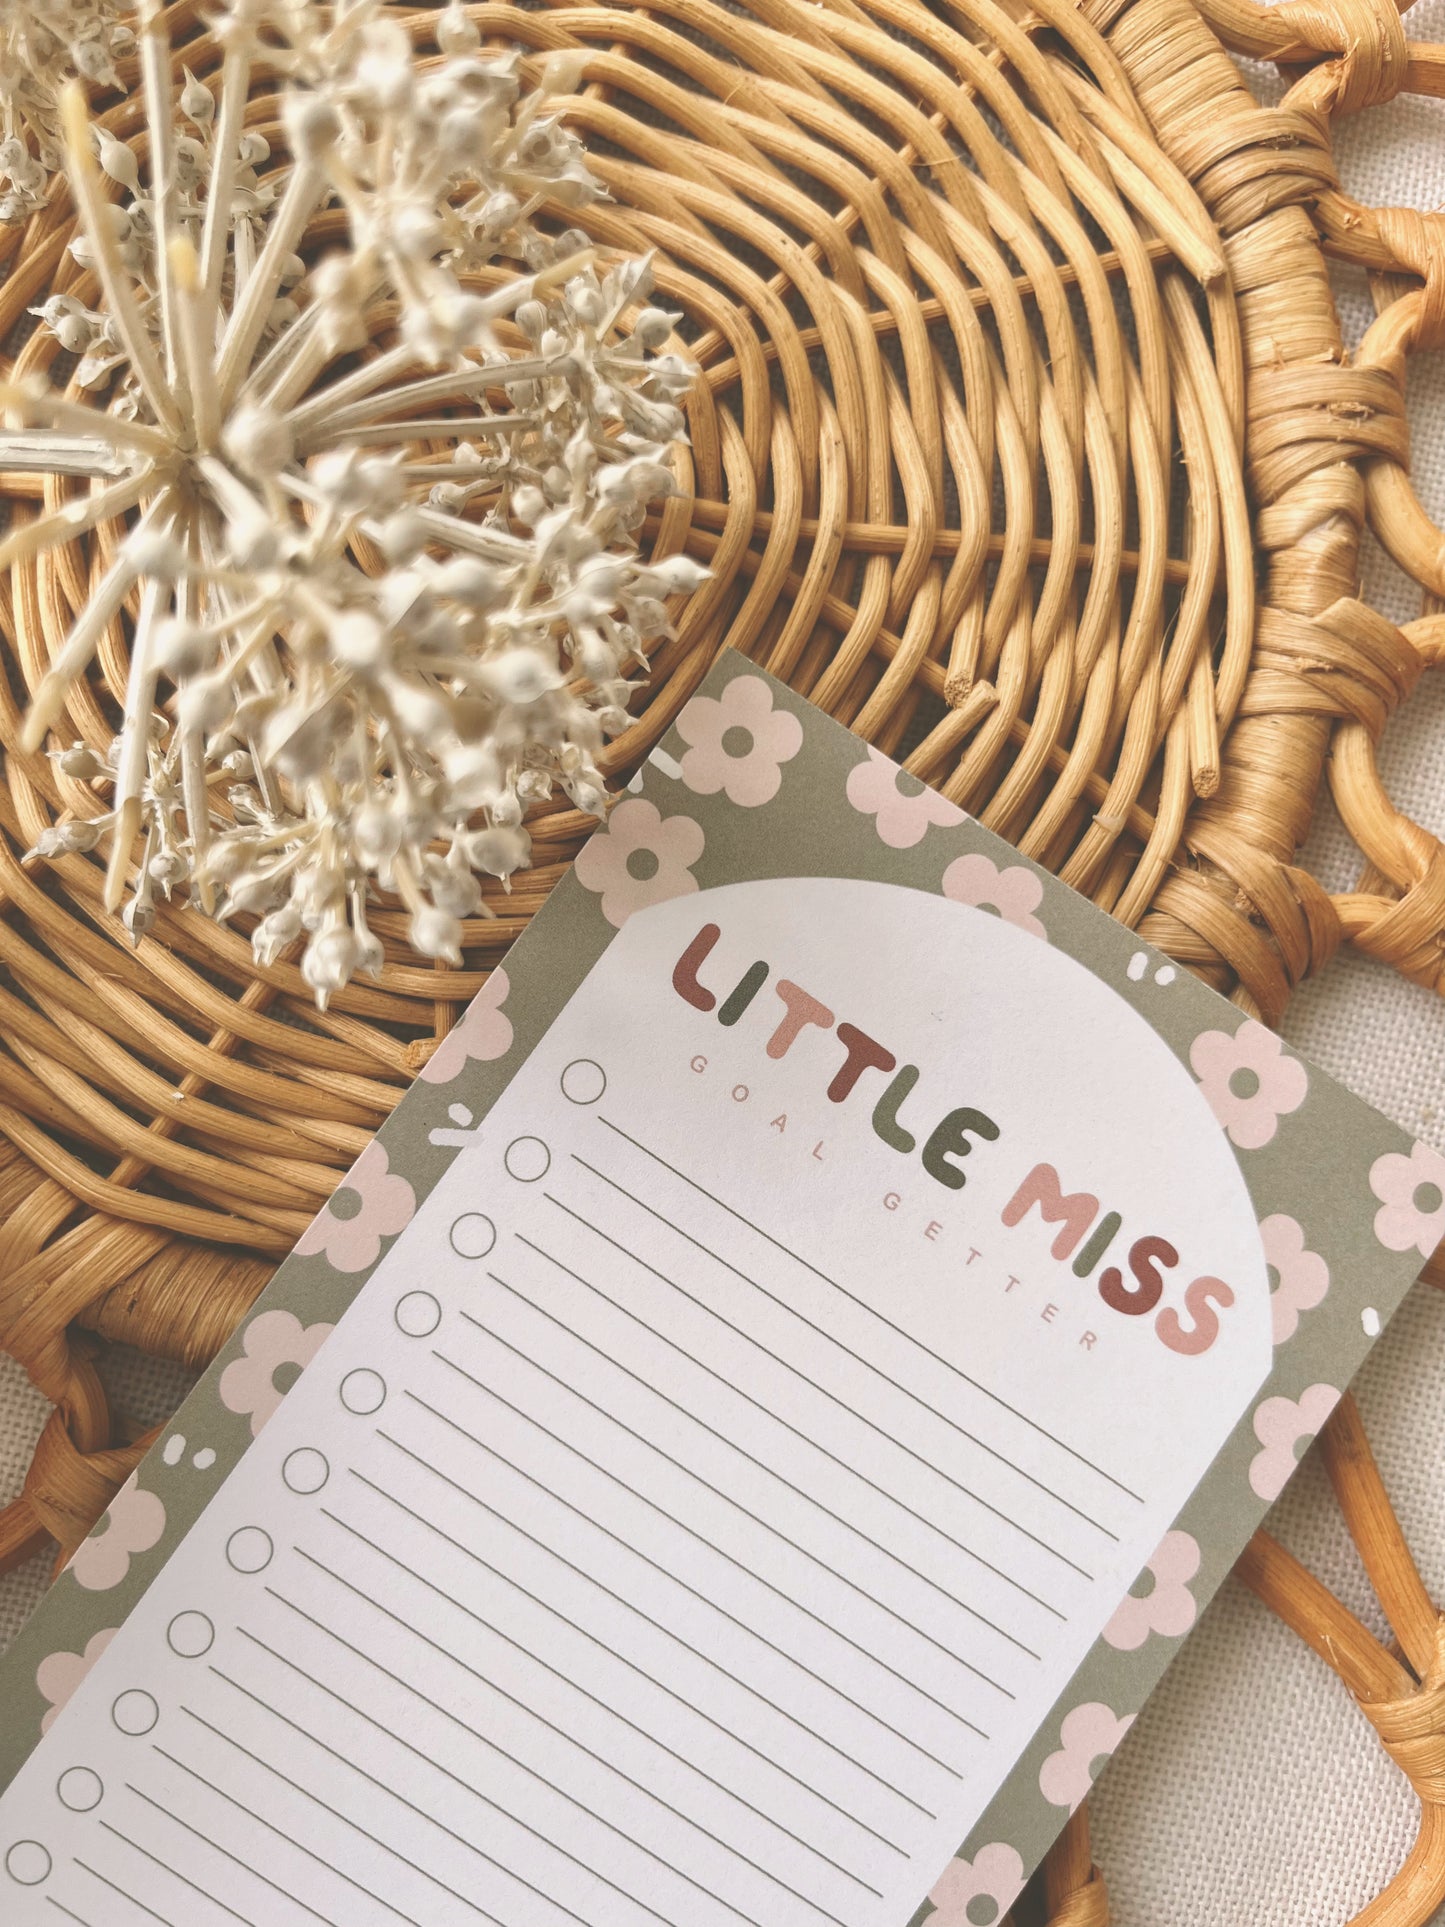 Little Miss Goal Getter | To Do List Notepad